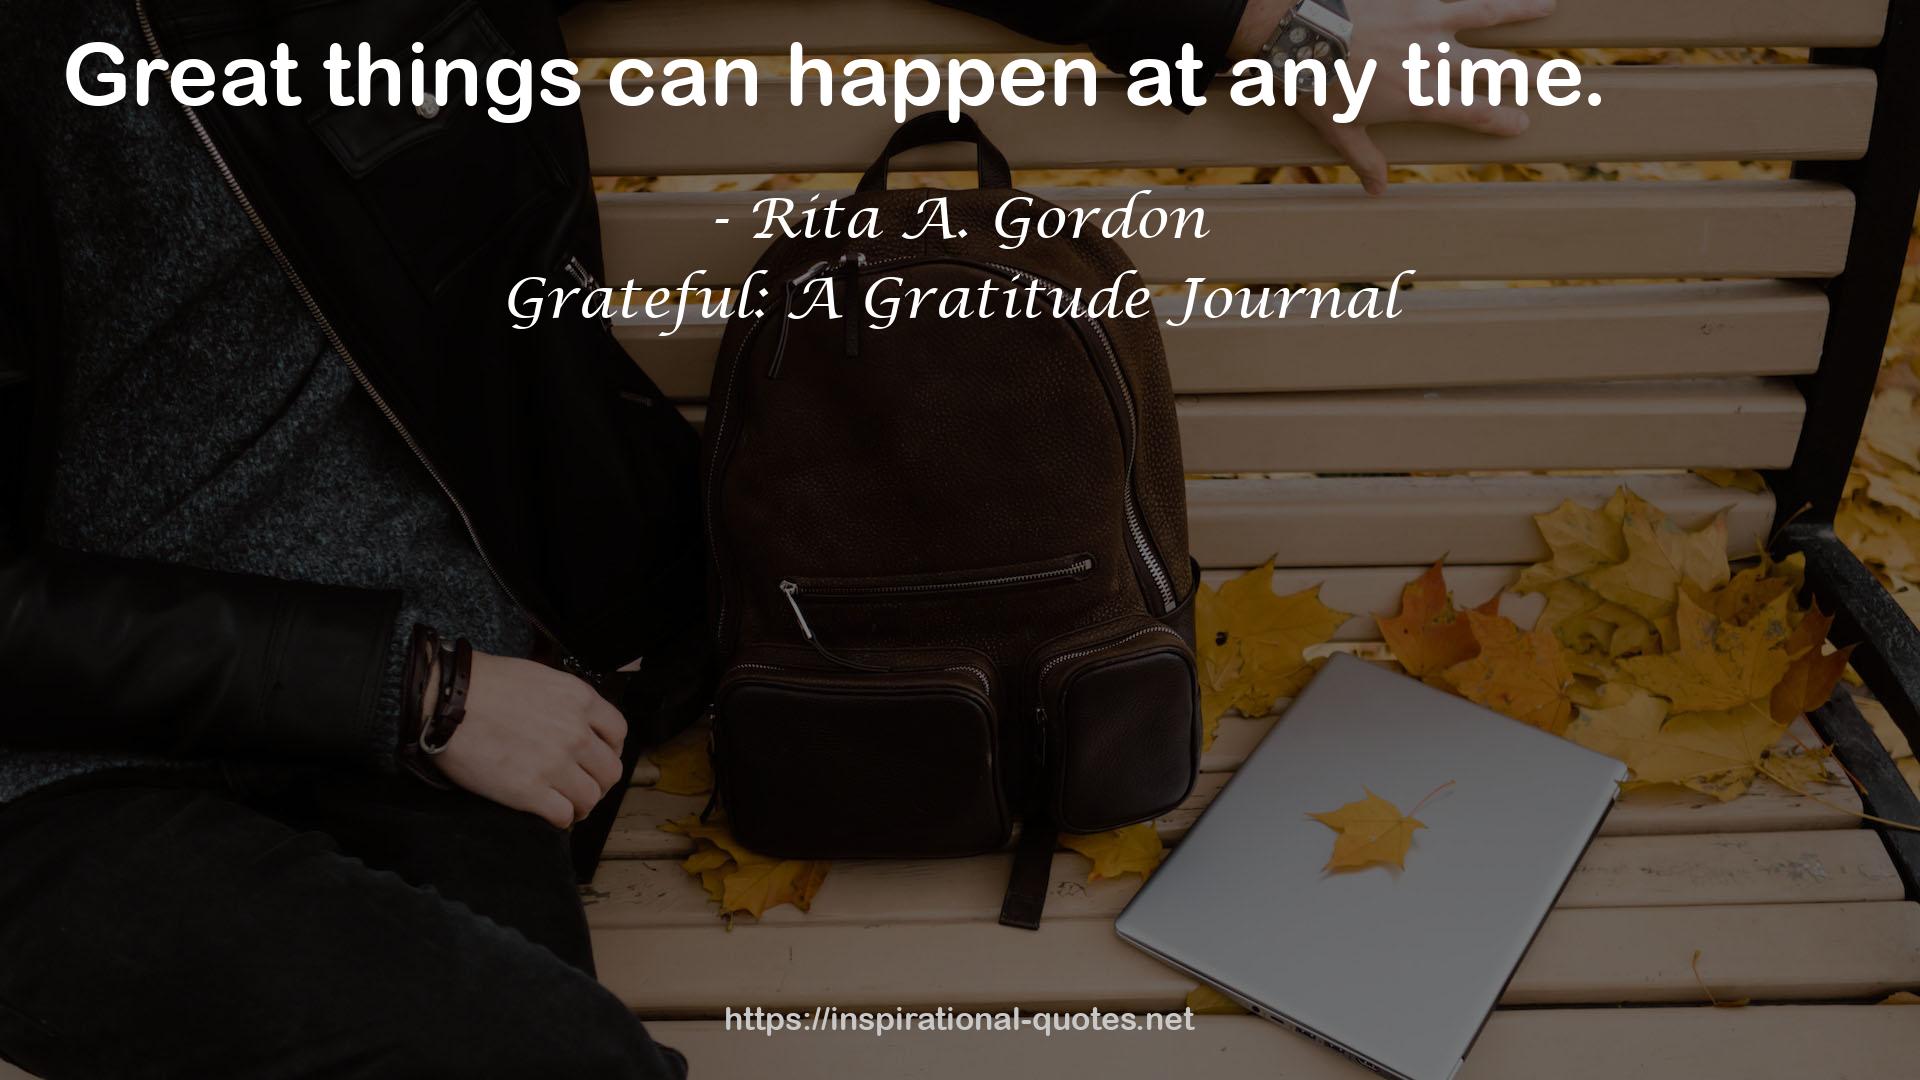 Grateful: A Gratitude Journal QUOTES